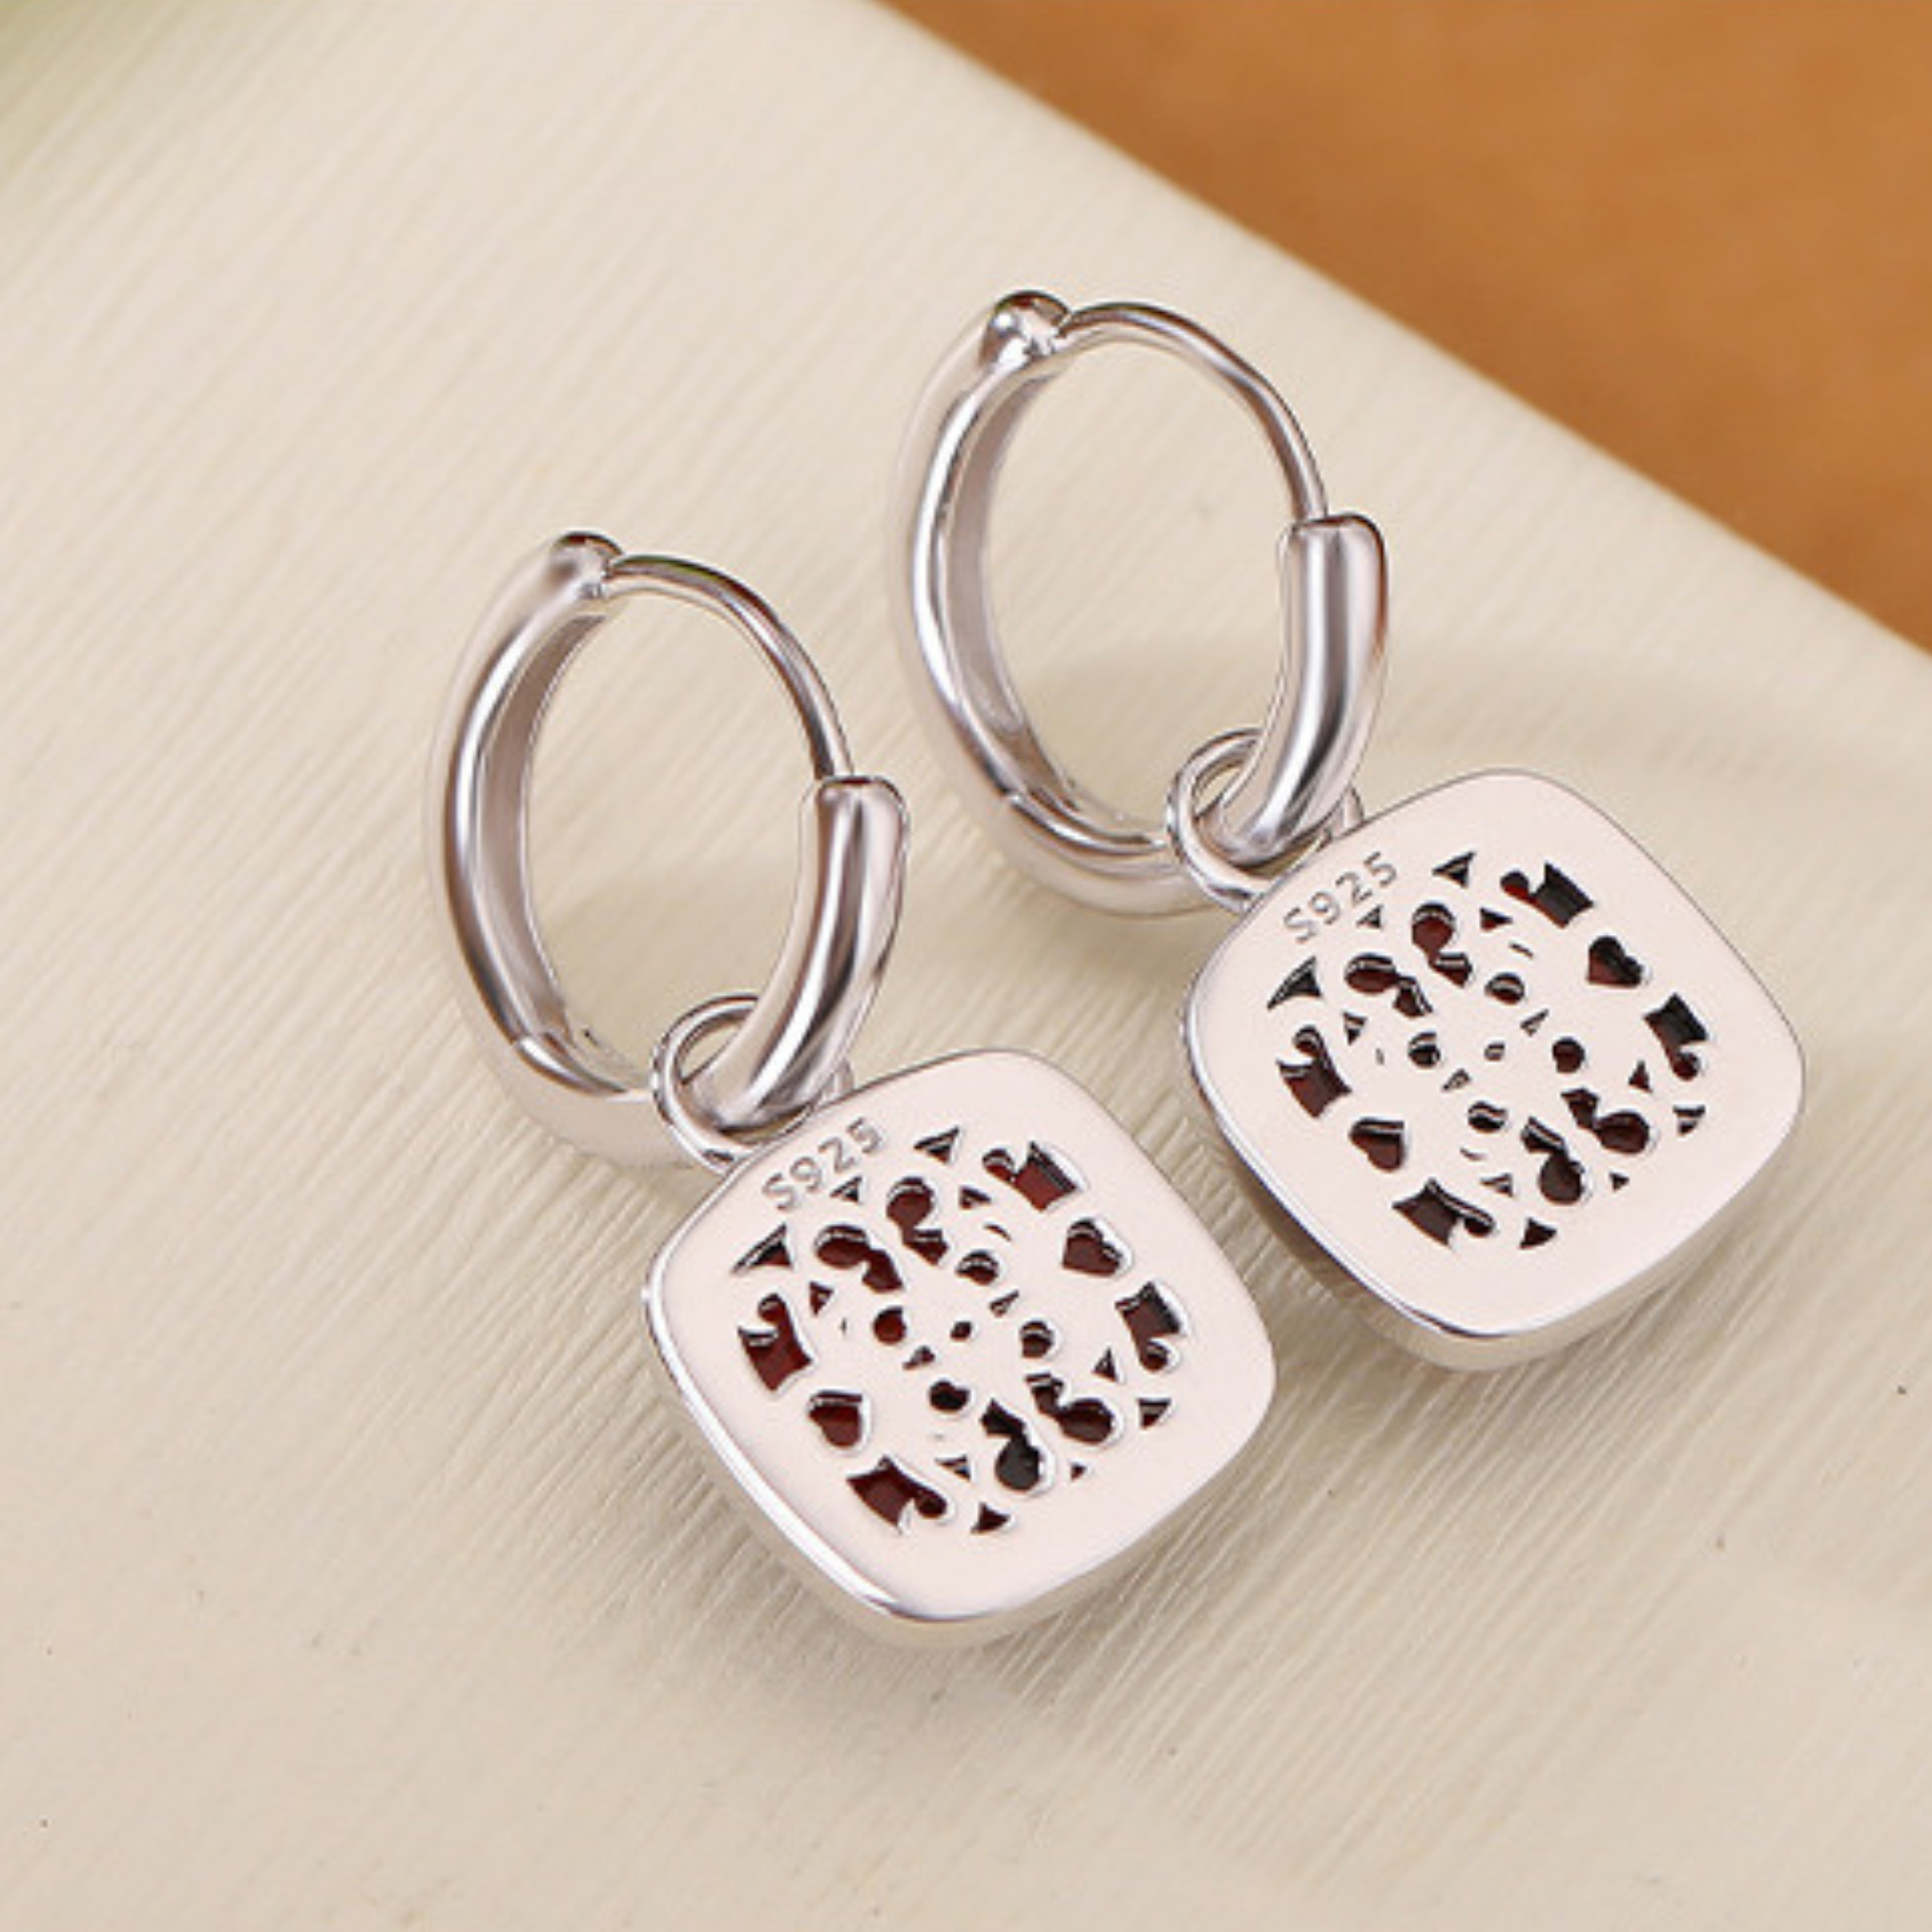 a pair of silver earrings